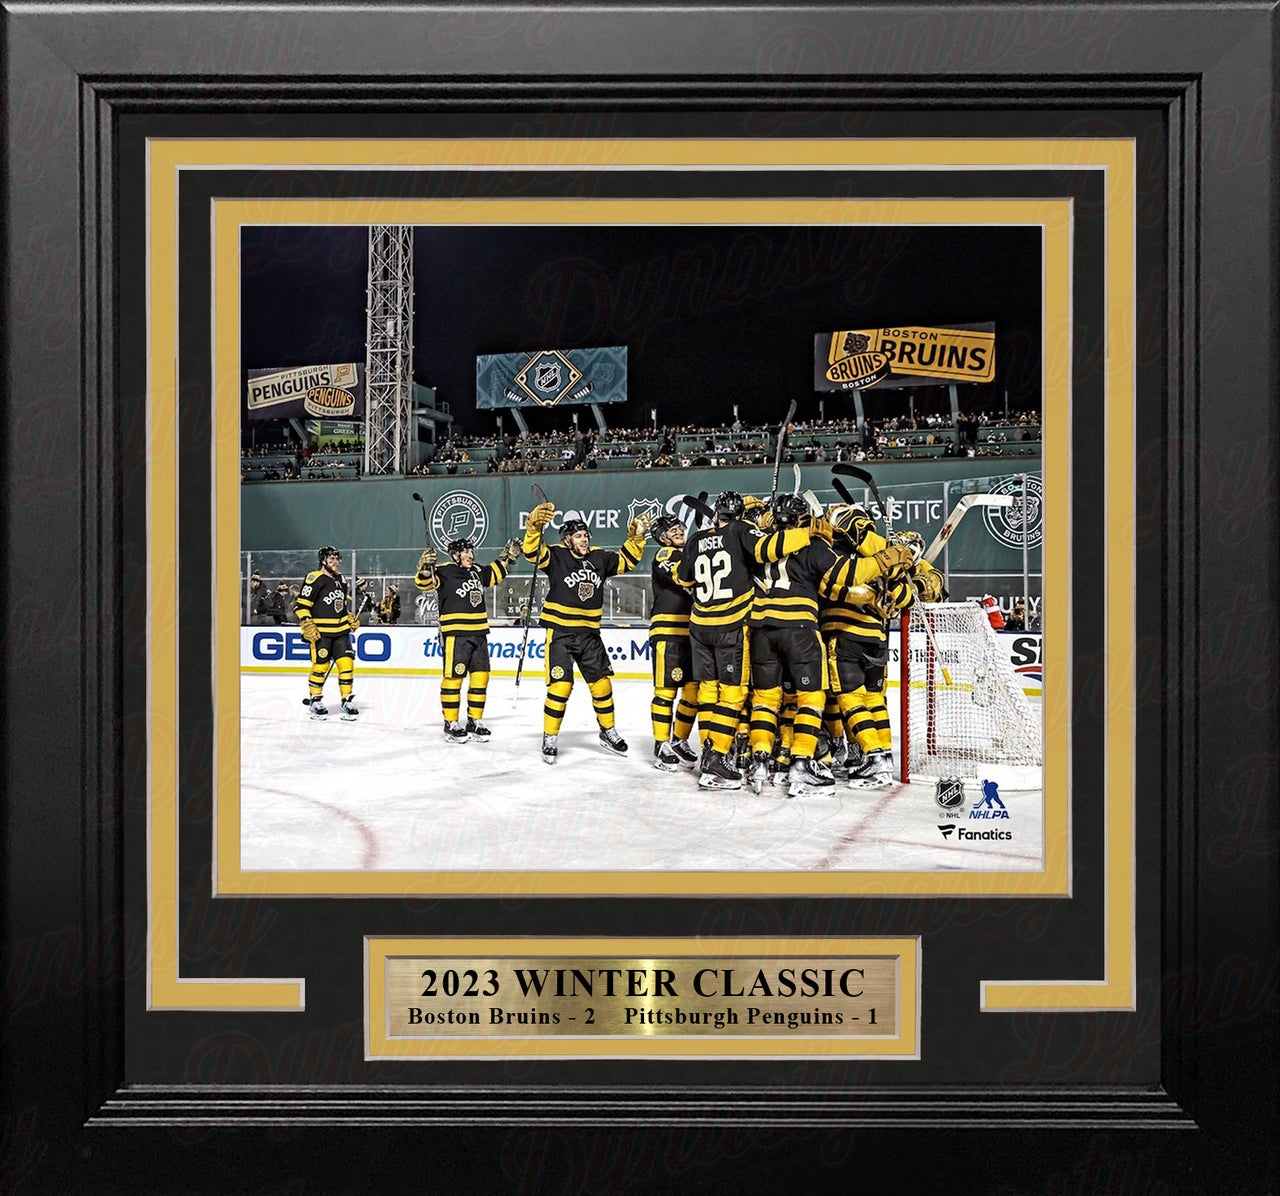 Boston Bruins 2023 Winter Classic Champions Team Celebration 8" x 10" Framed Hockey Photo - Dynasty Sports & Framing 